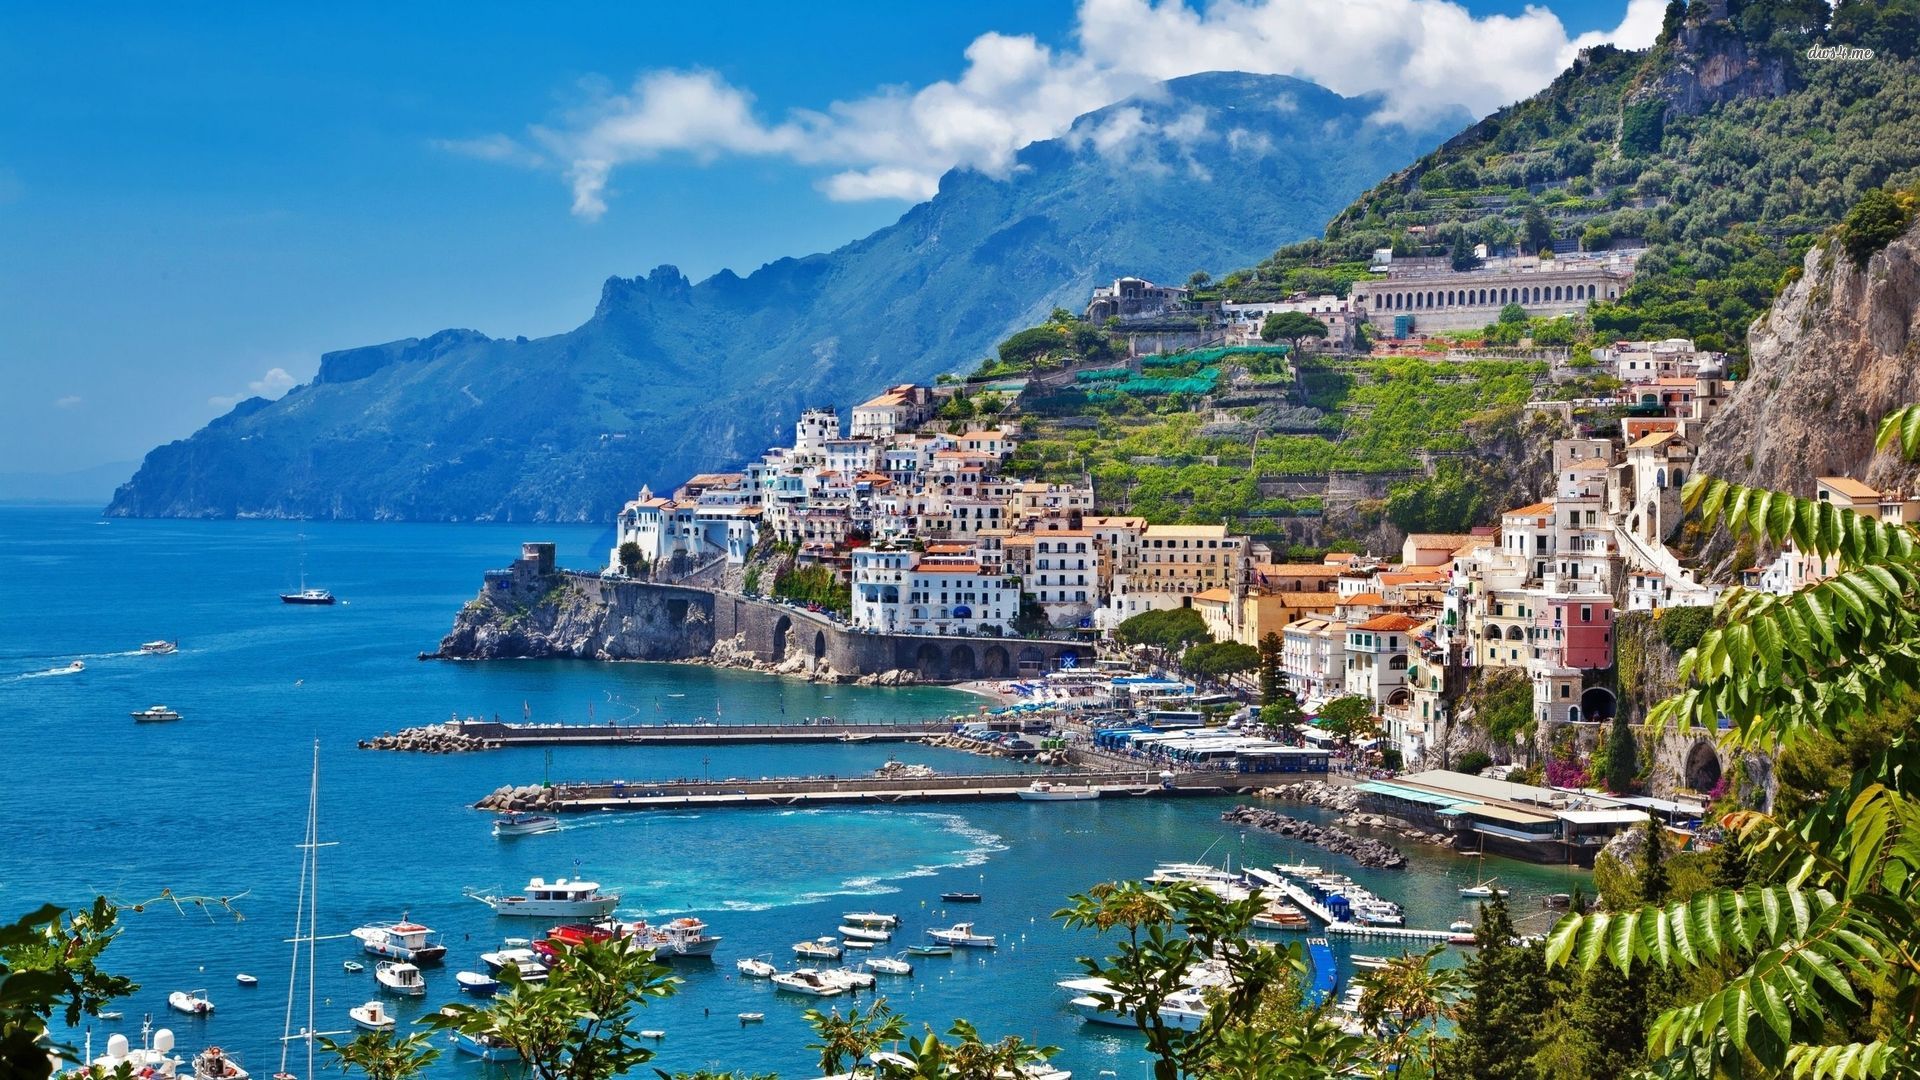 Amalfi Coast Wallpaper